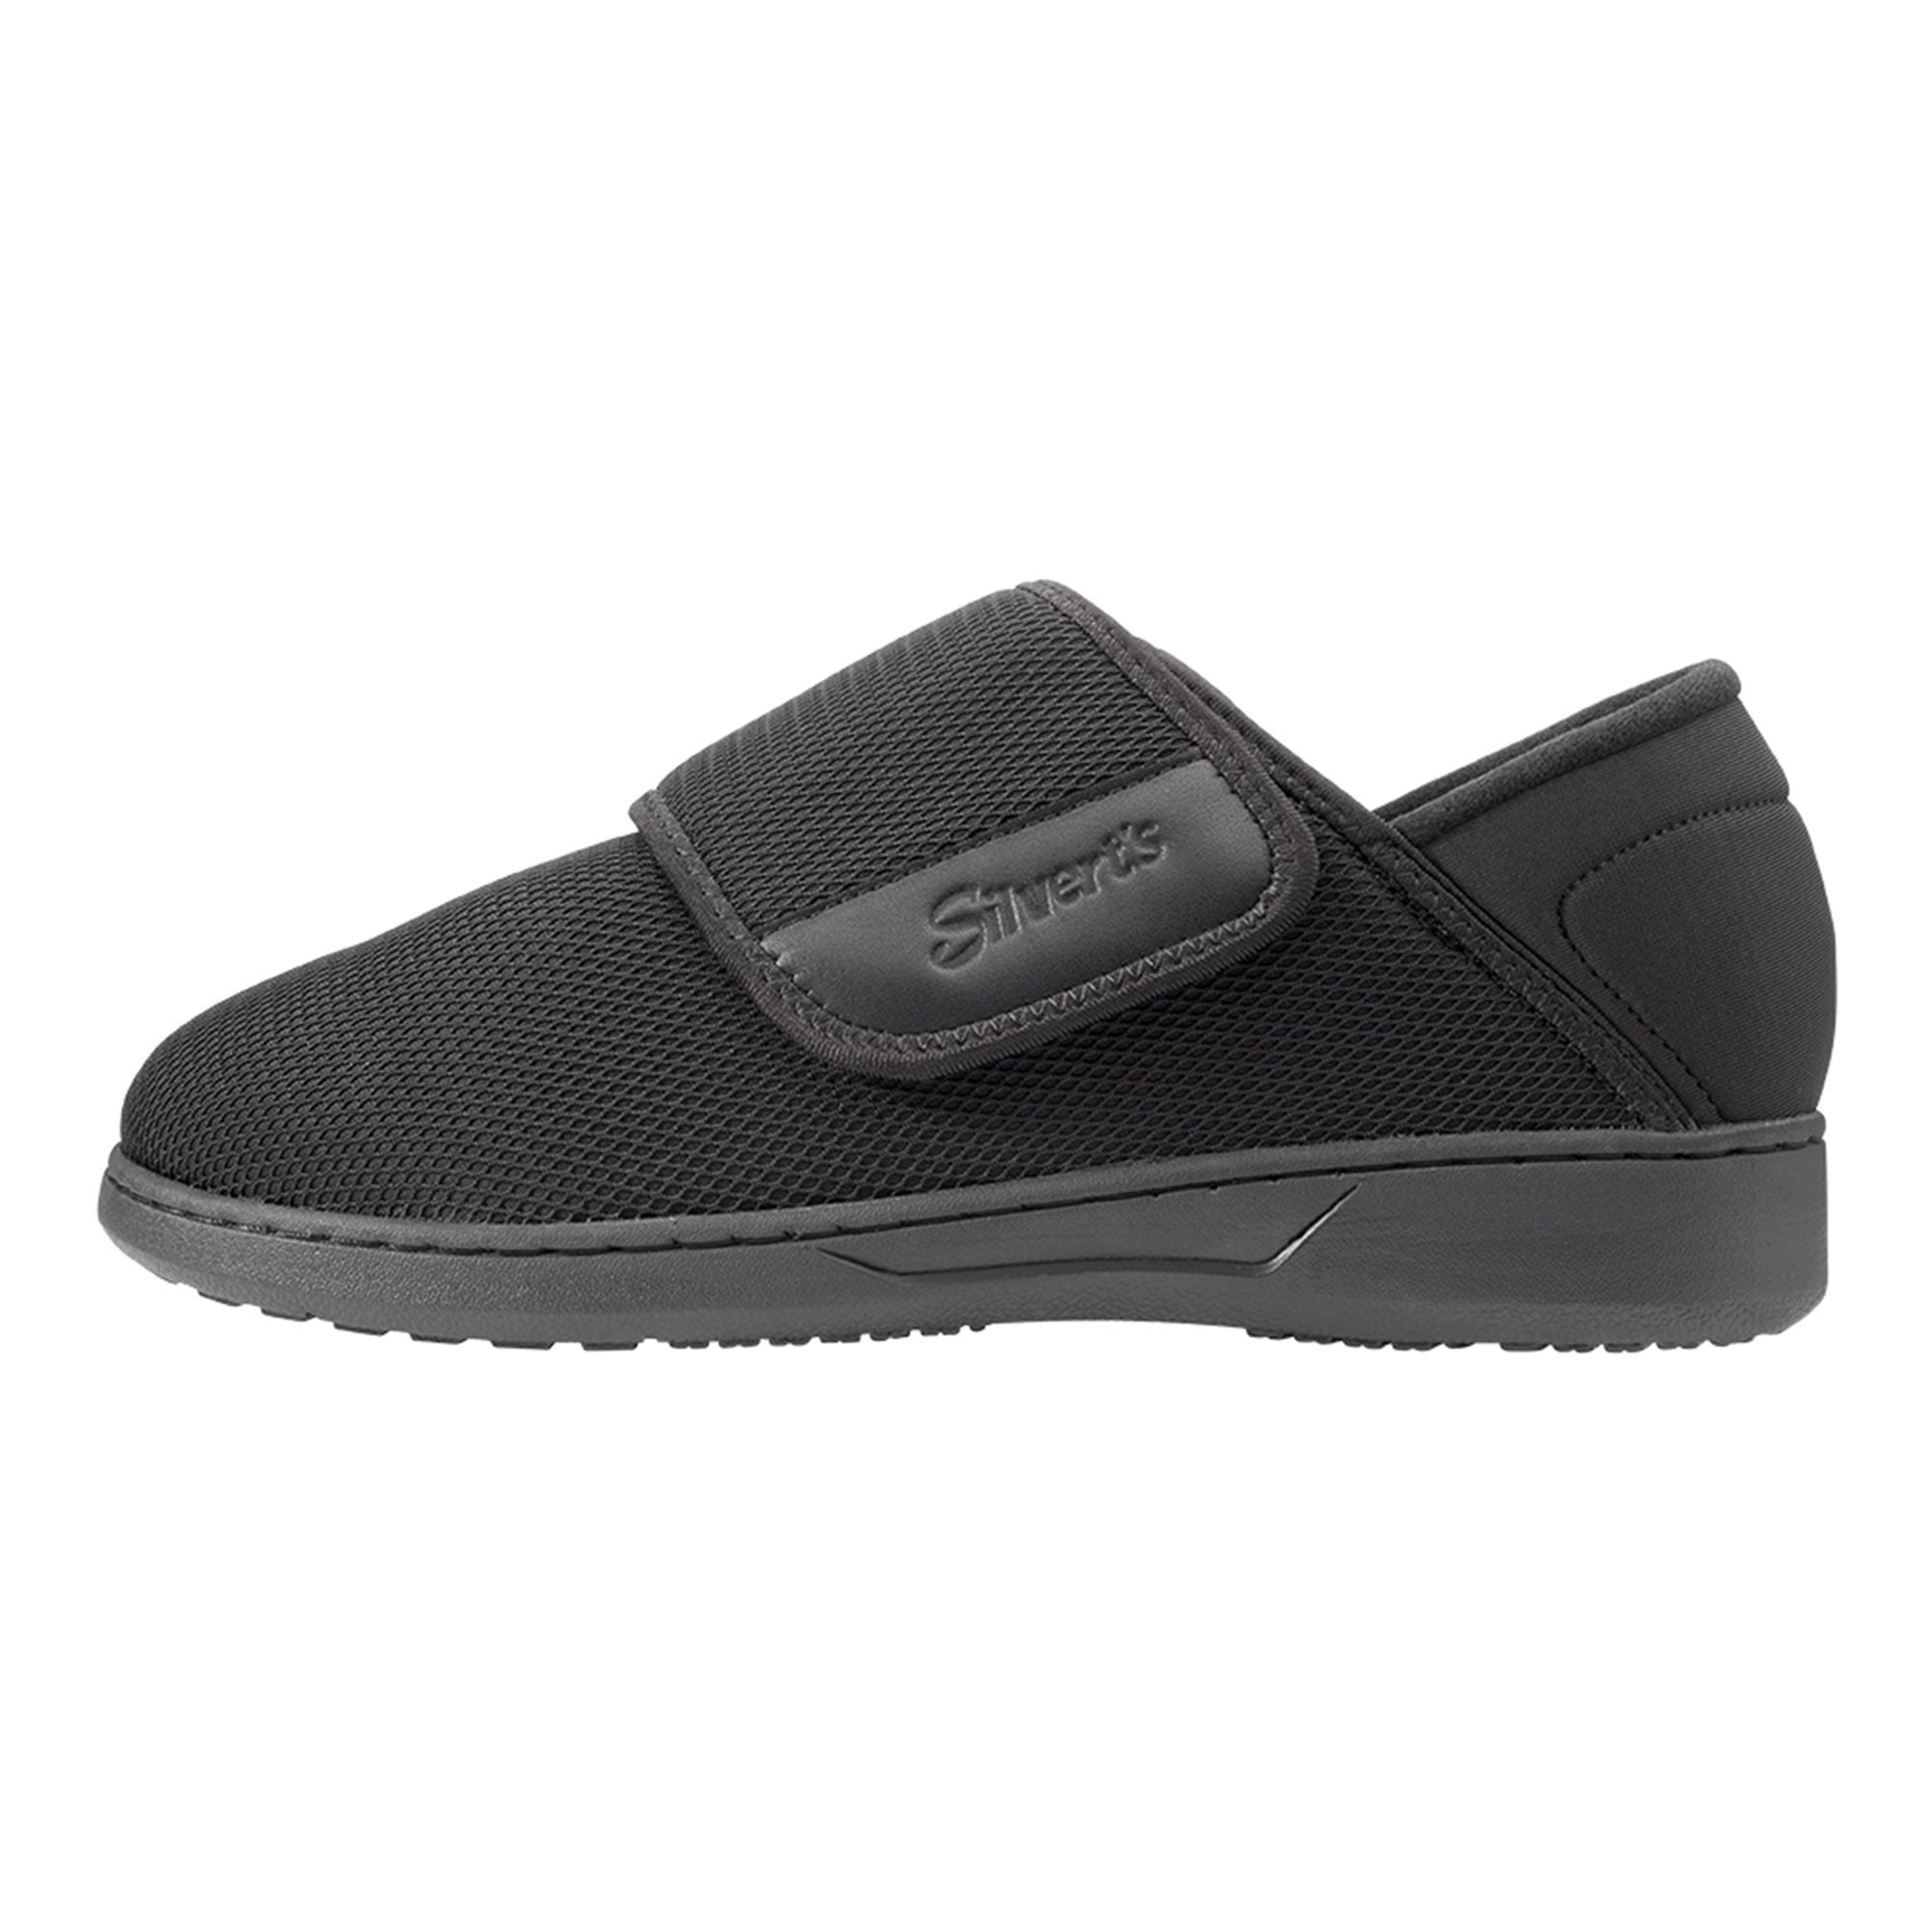 Silverts? Comfort Steps Hook and Loop Closure Shoe, Size 10, Black (1 Unit)